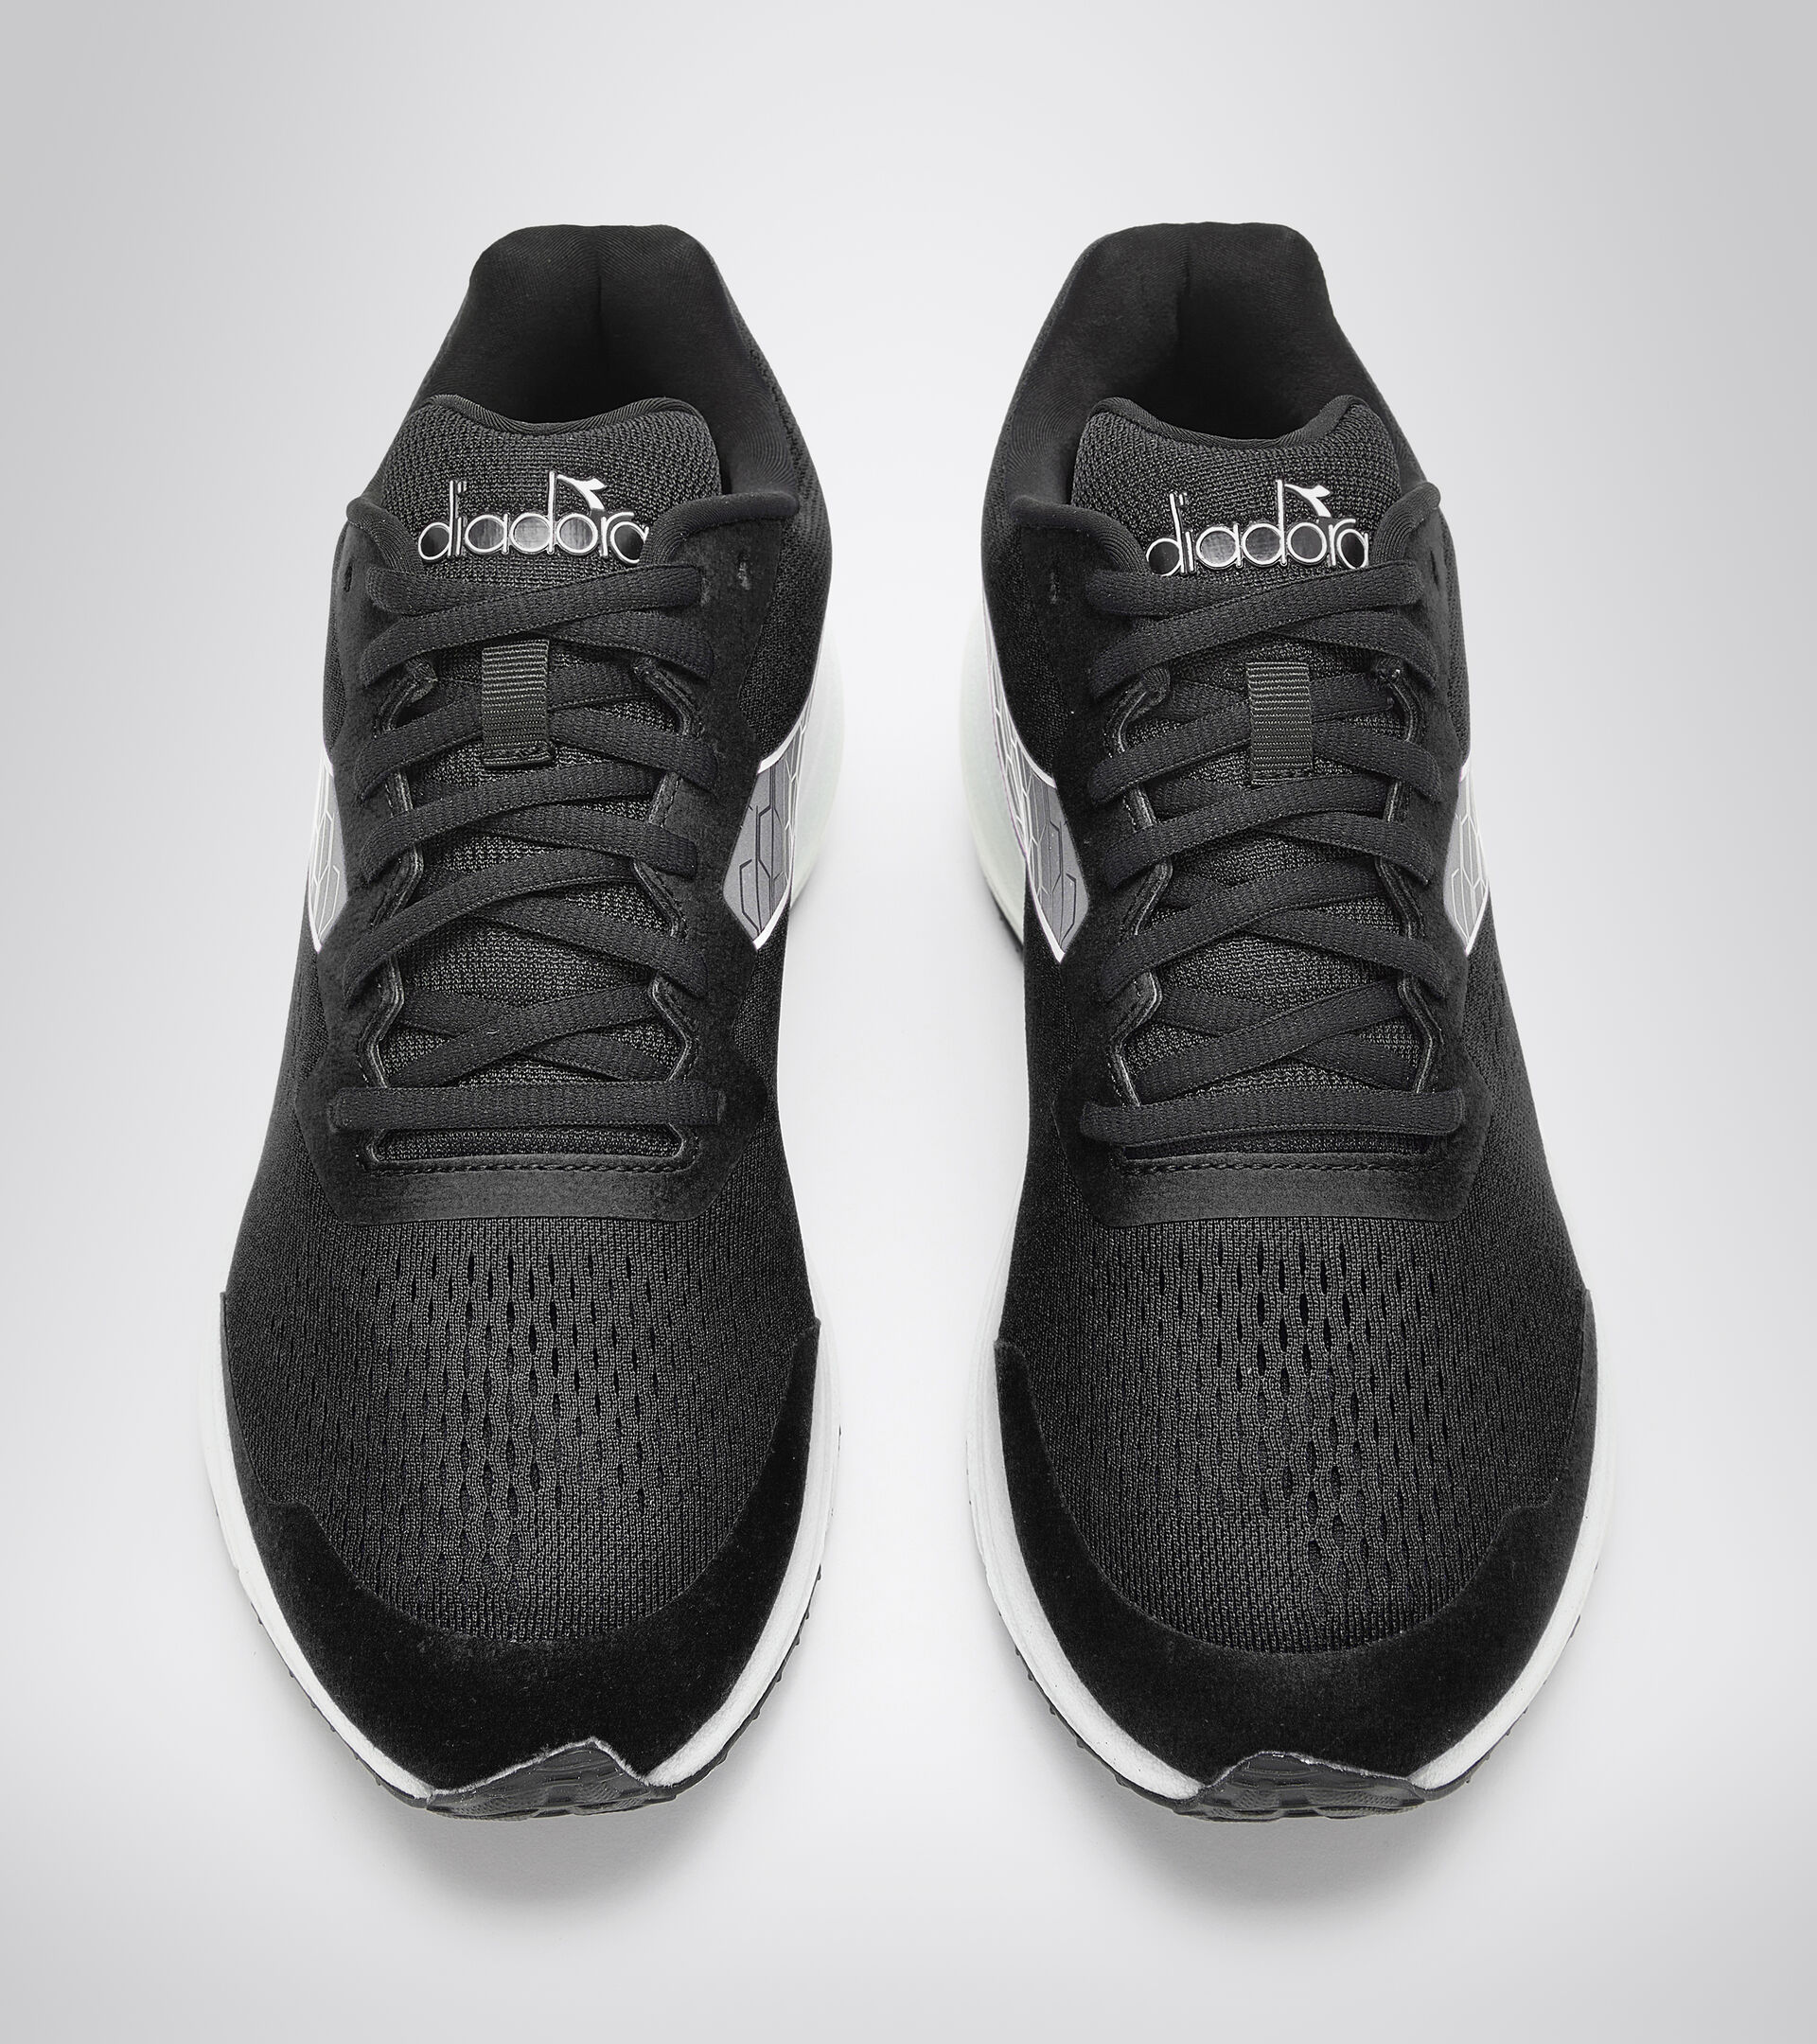 Chaussures de running - Homme FRECCIA 2 NERO/ARGENTO/BIANCO OTTICO - Diadora